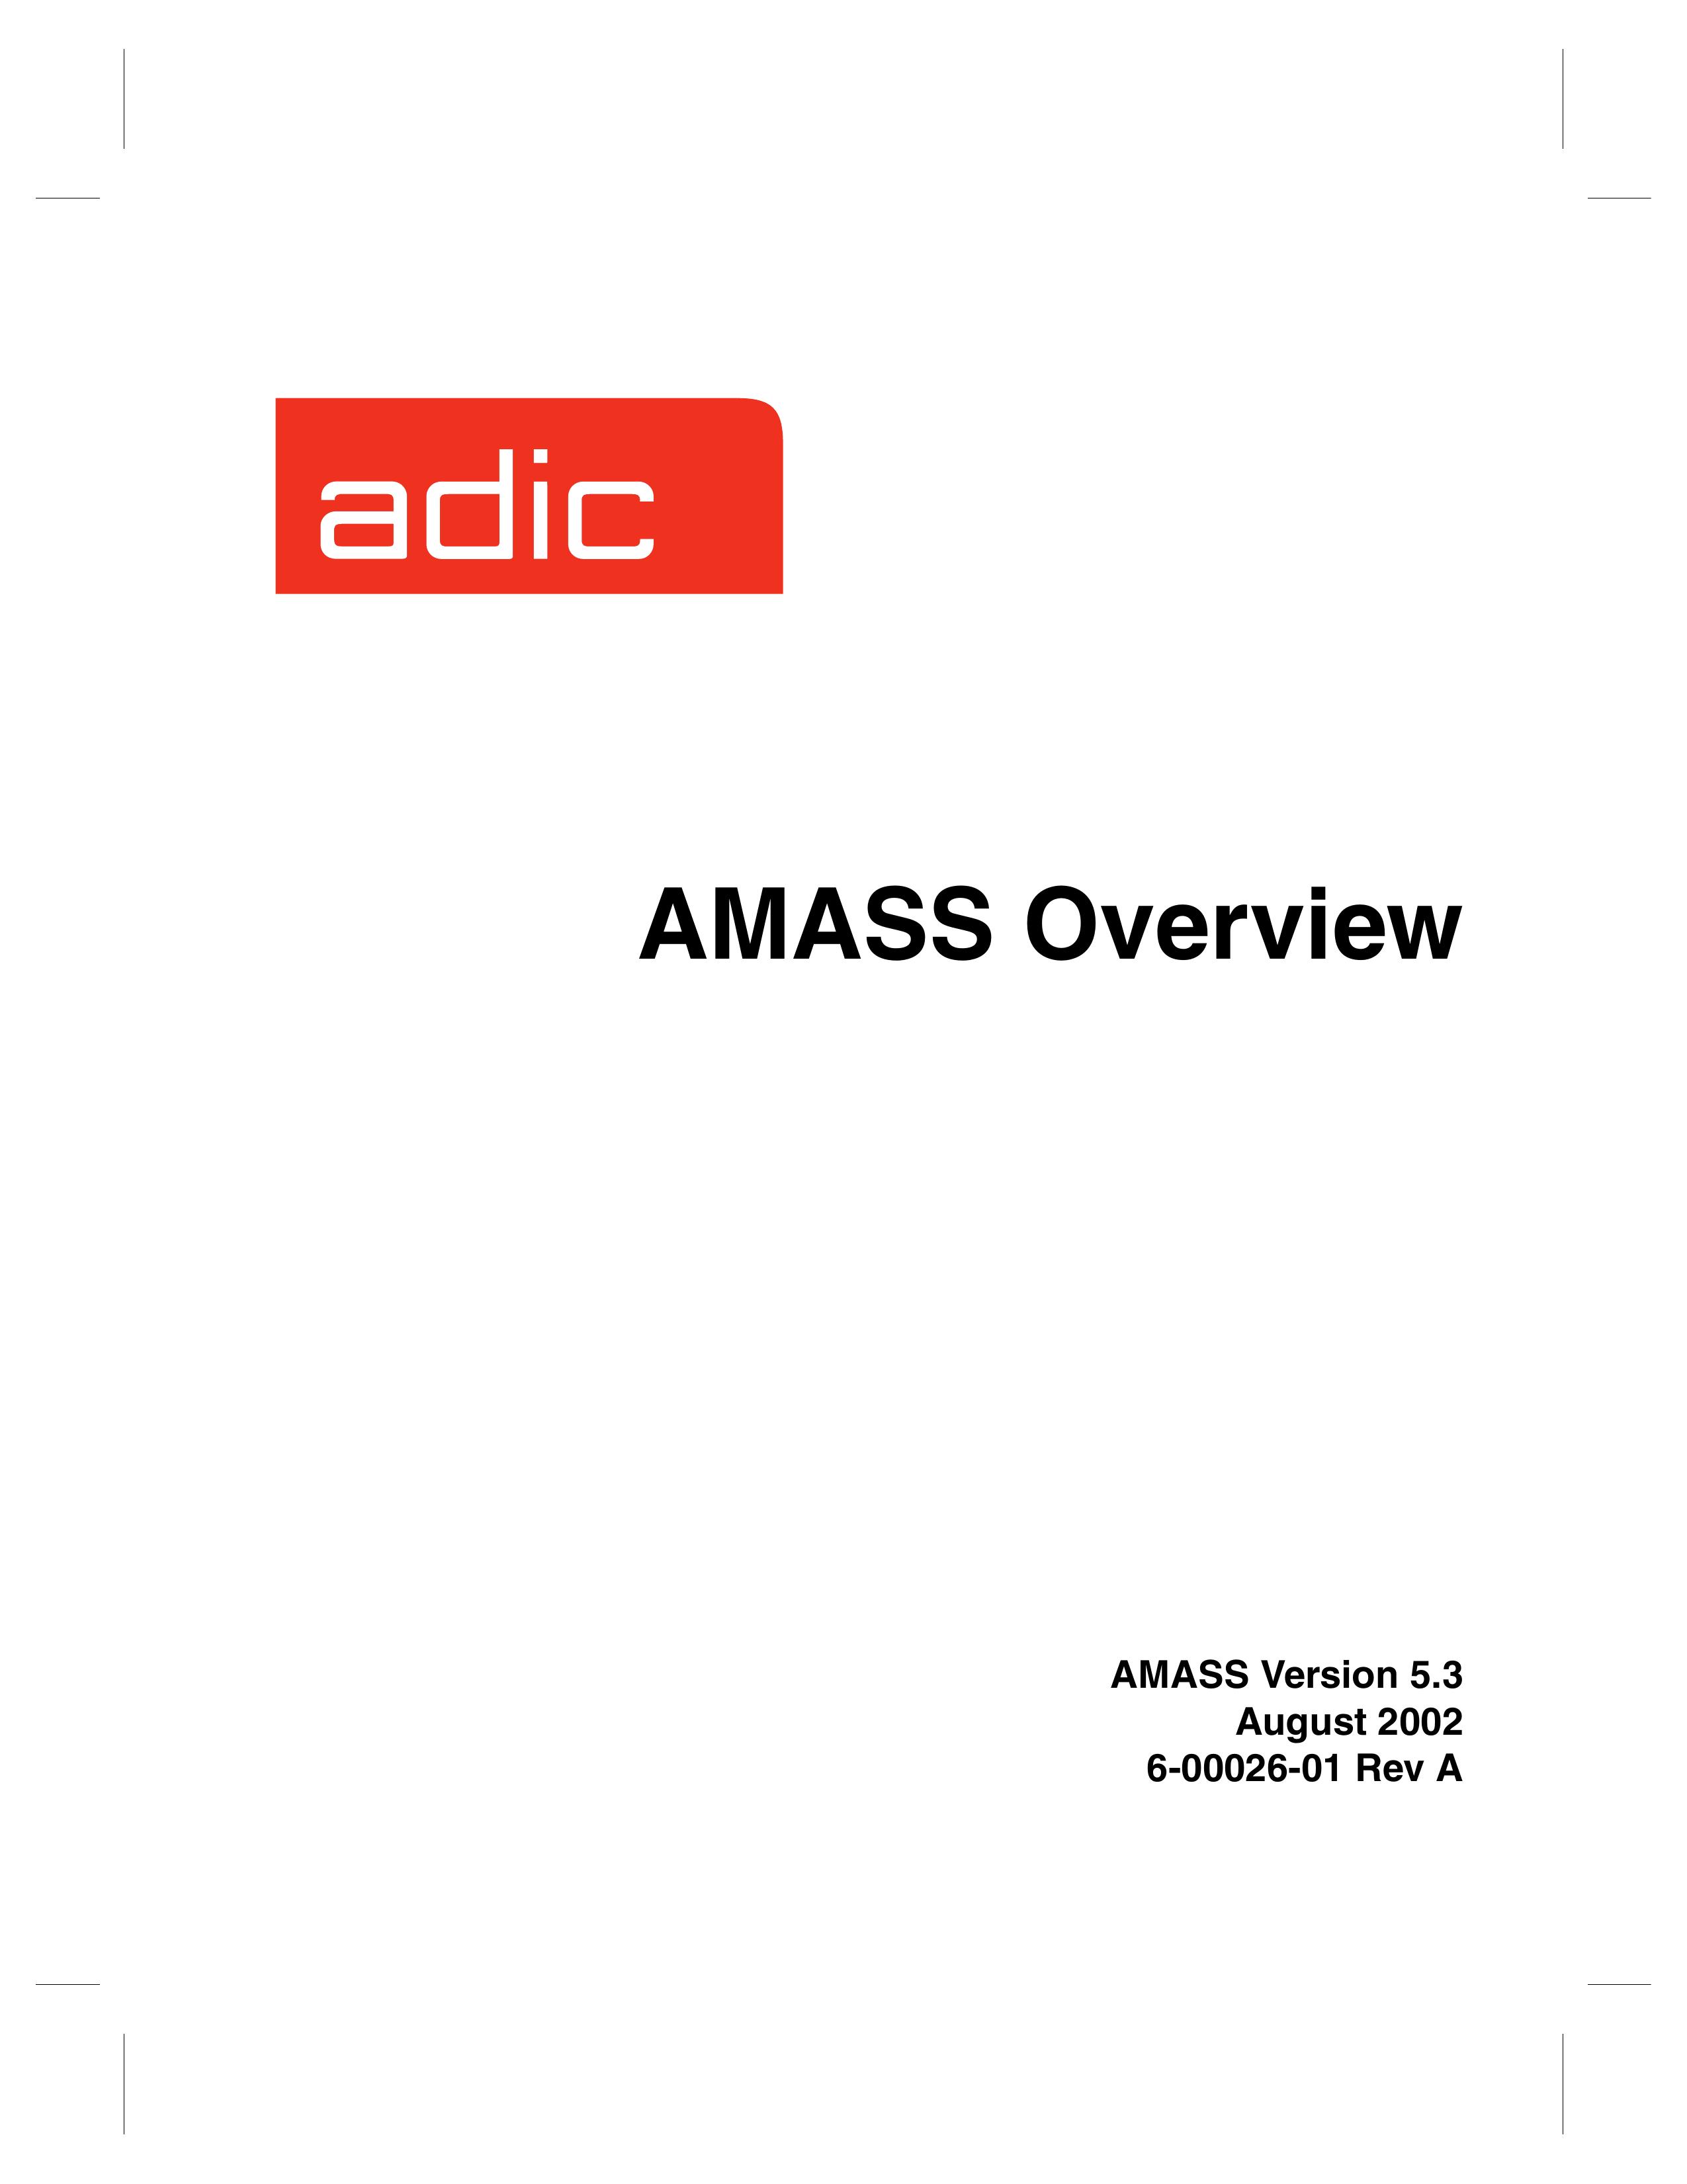 ADIC 6-00026-01 Rev A Microscope & Magnifier User Manual